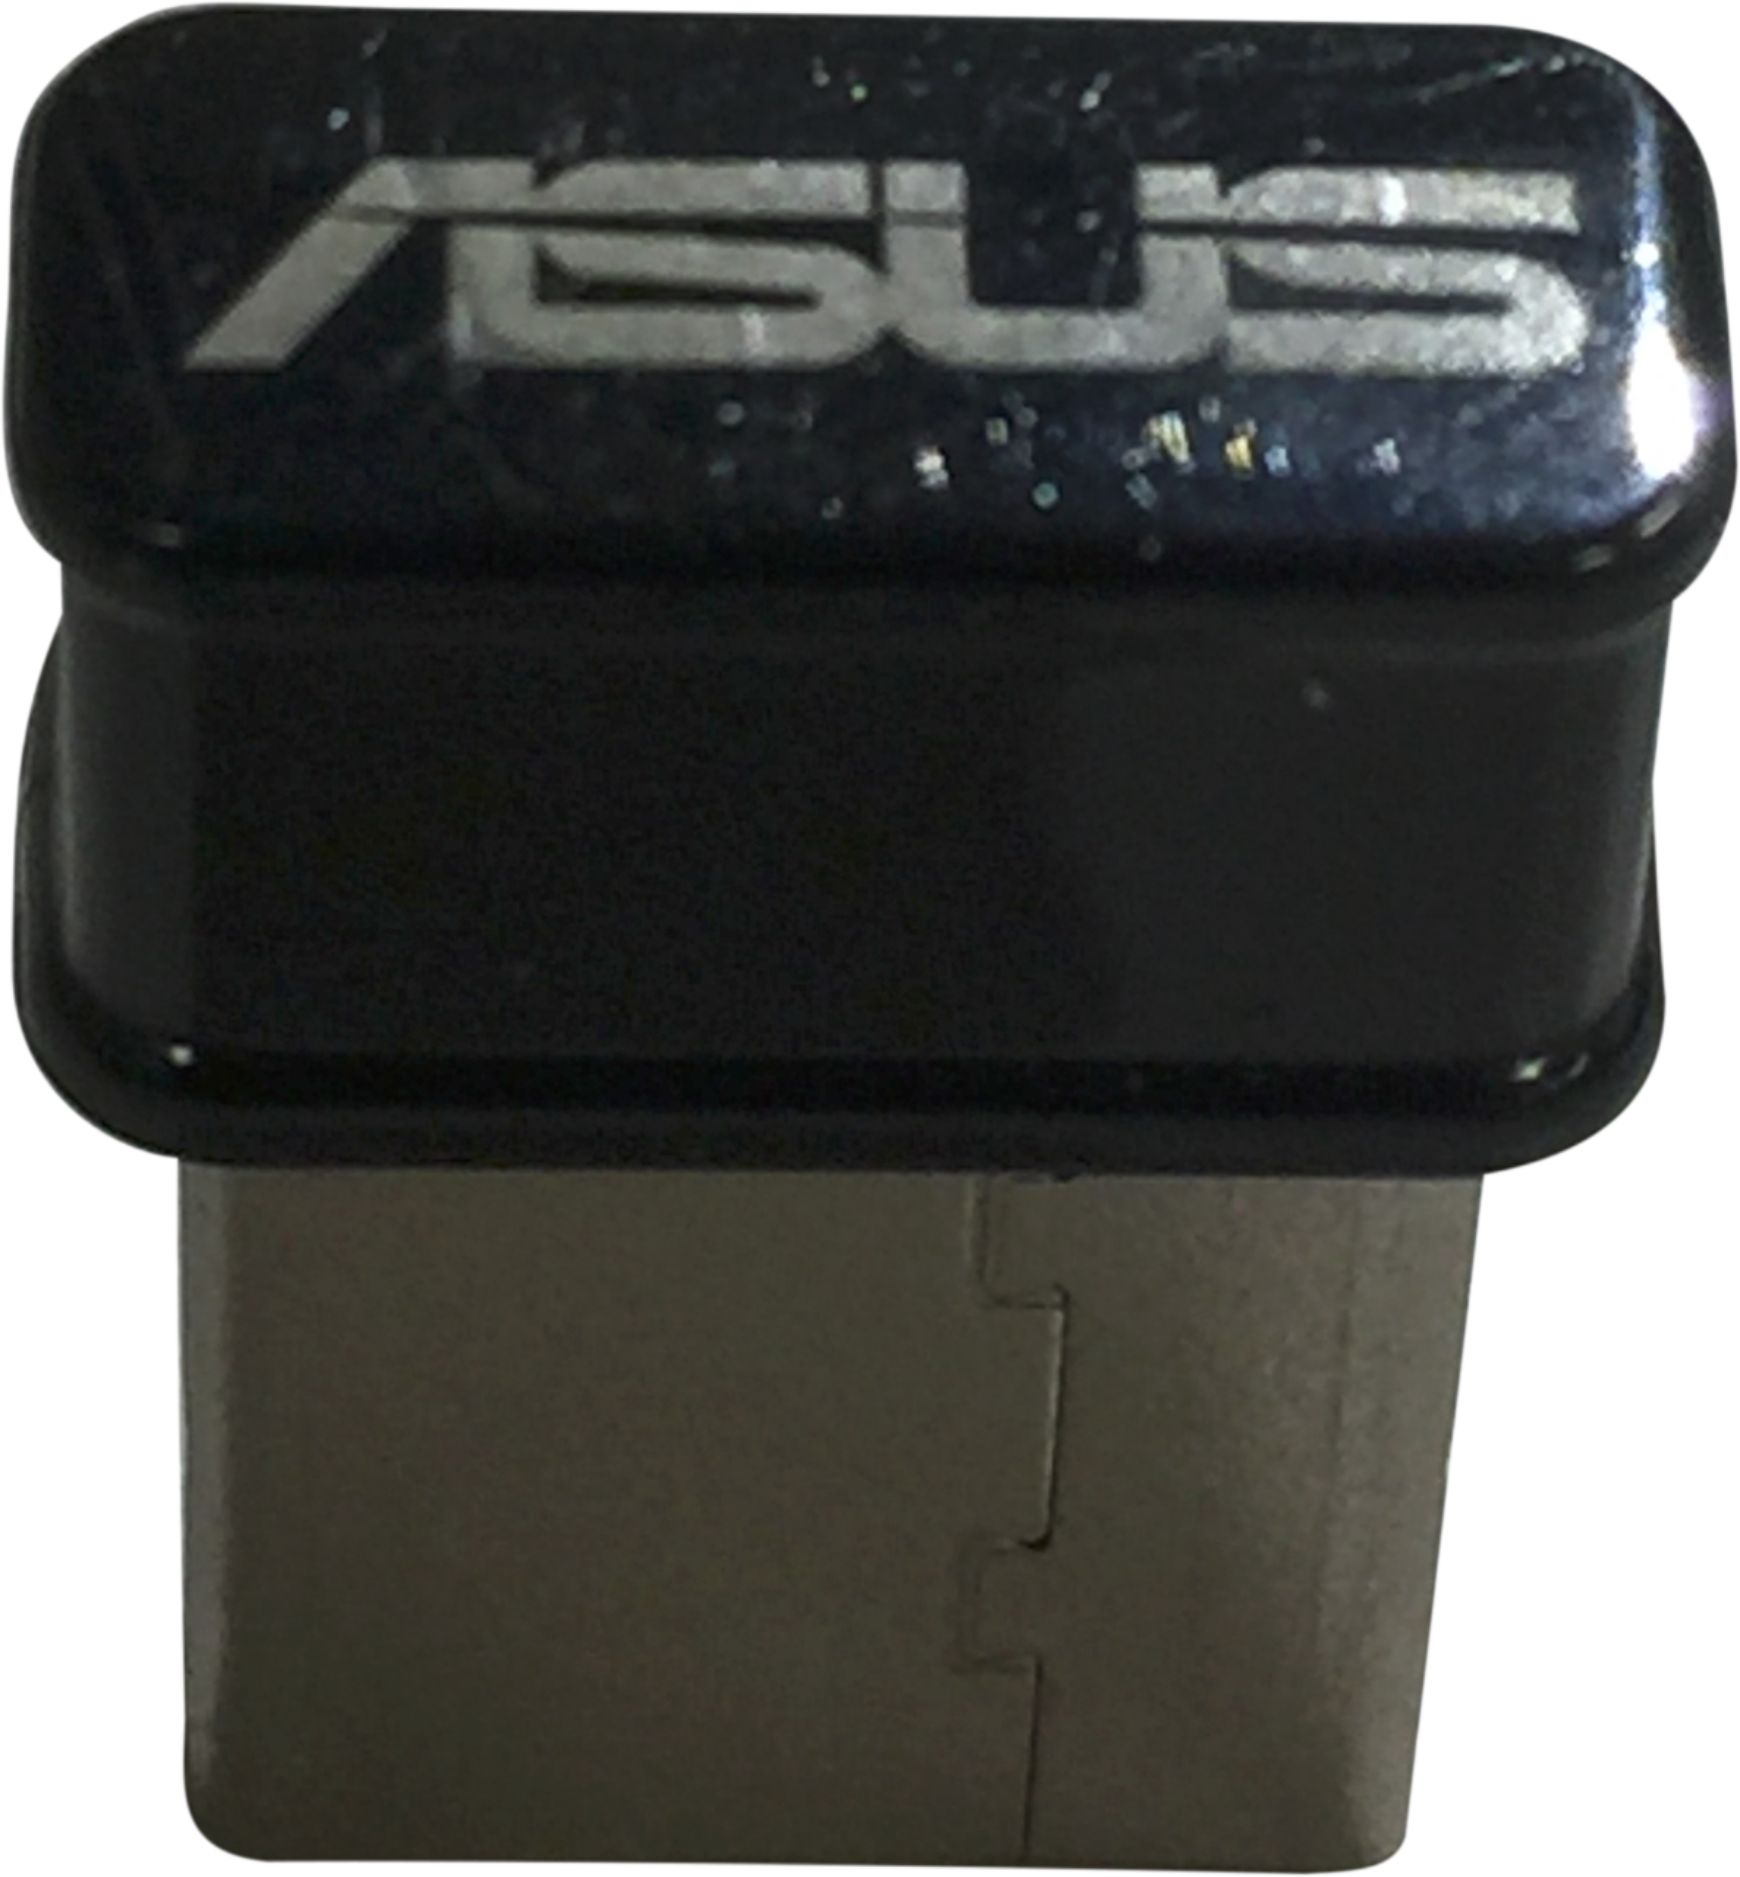 USB-AC53 Nano  ASUS Onlineshop